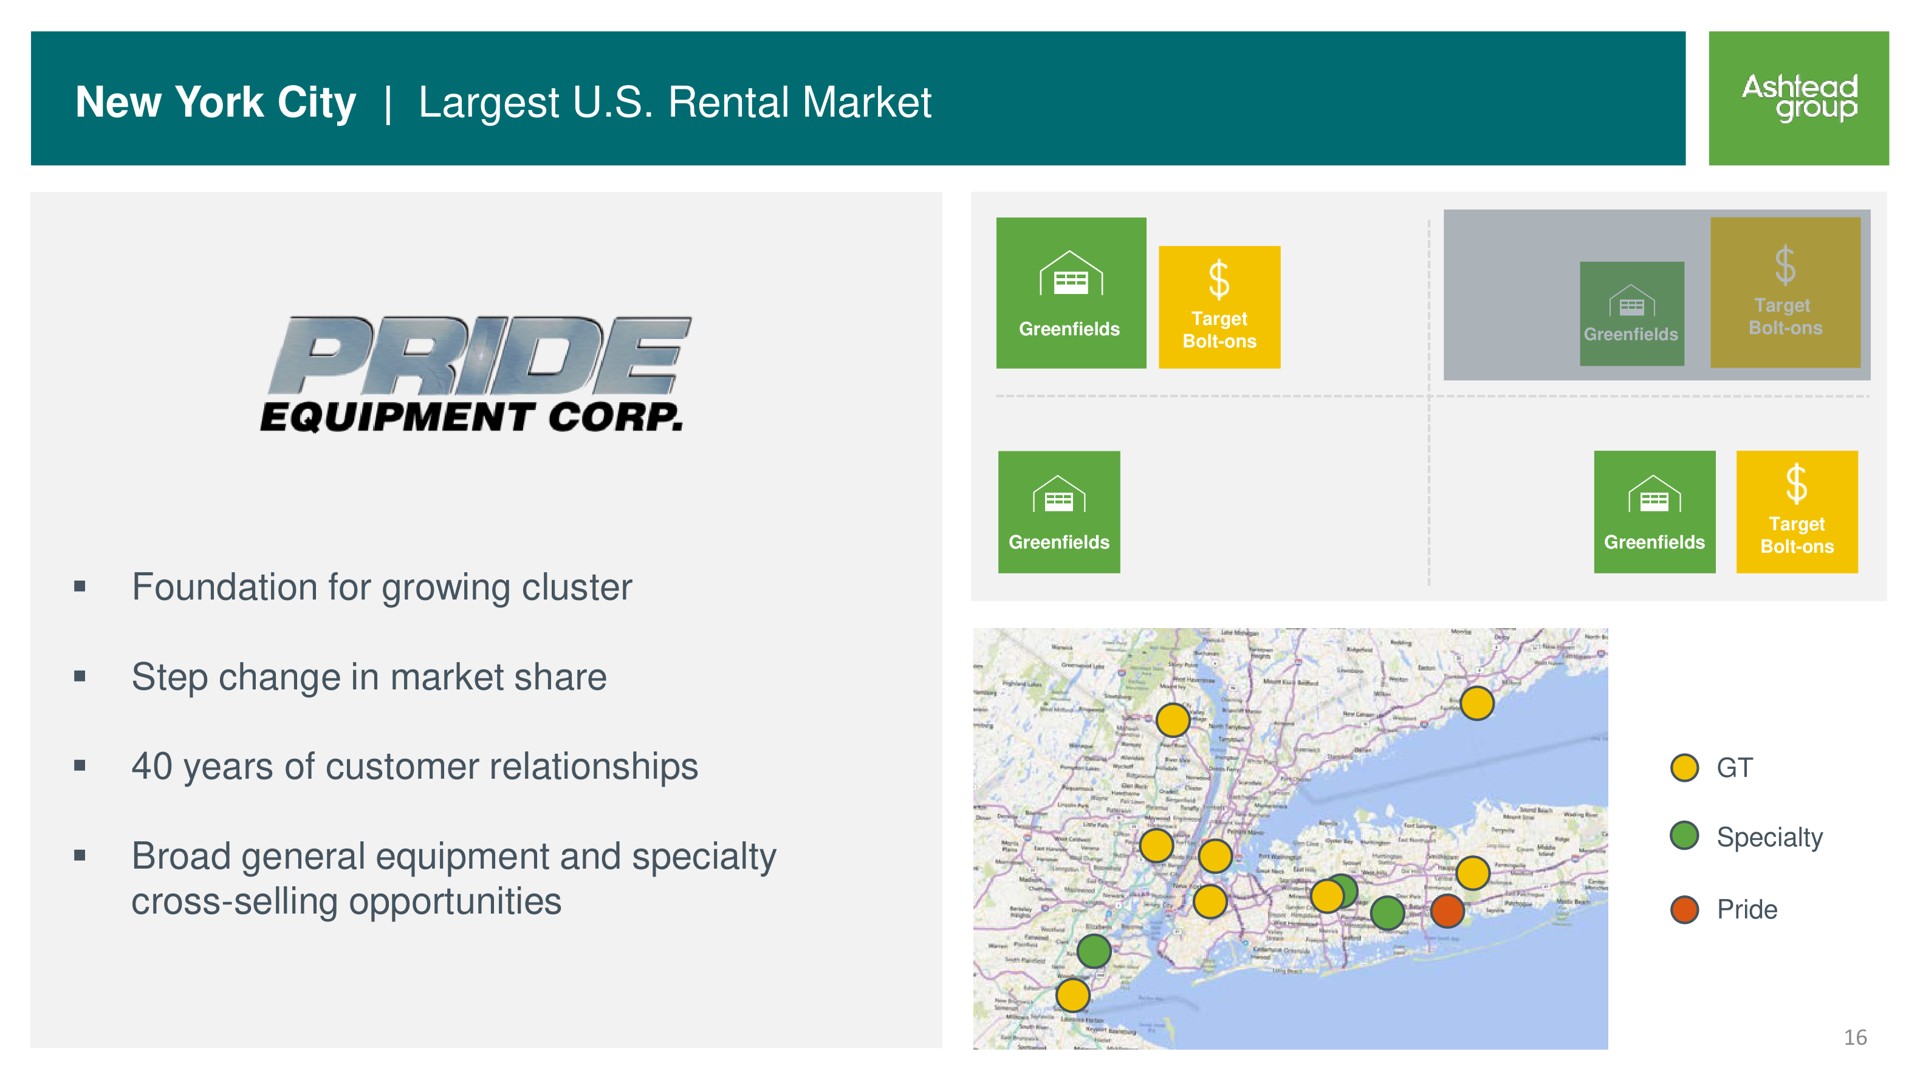 new york city rental market equipment corp | Ashtead Group